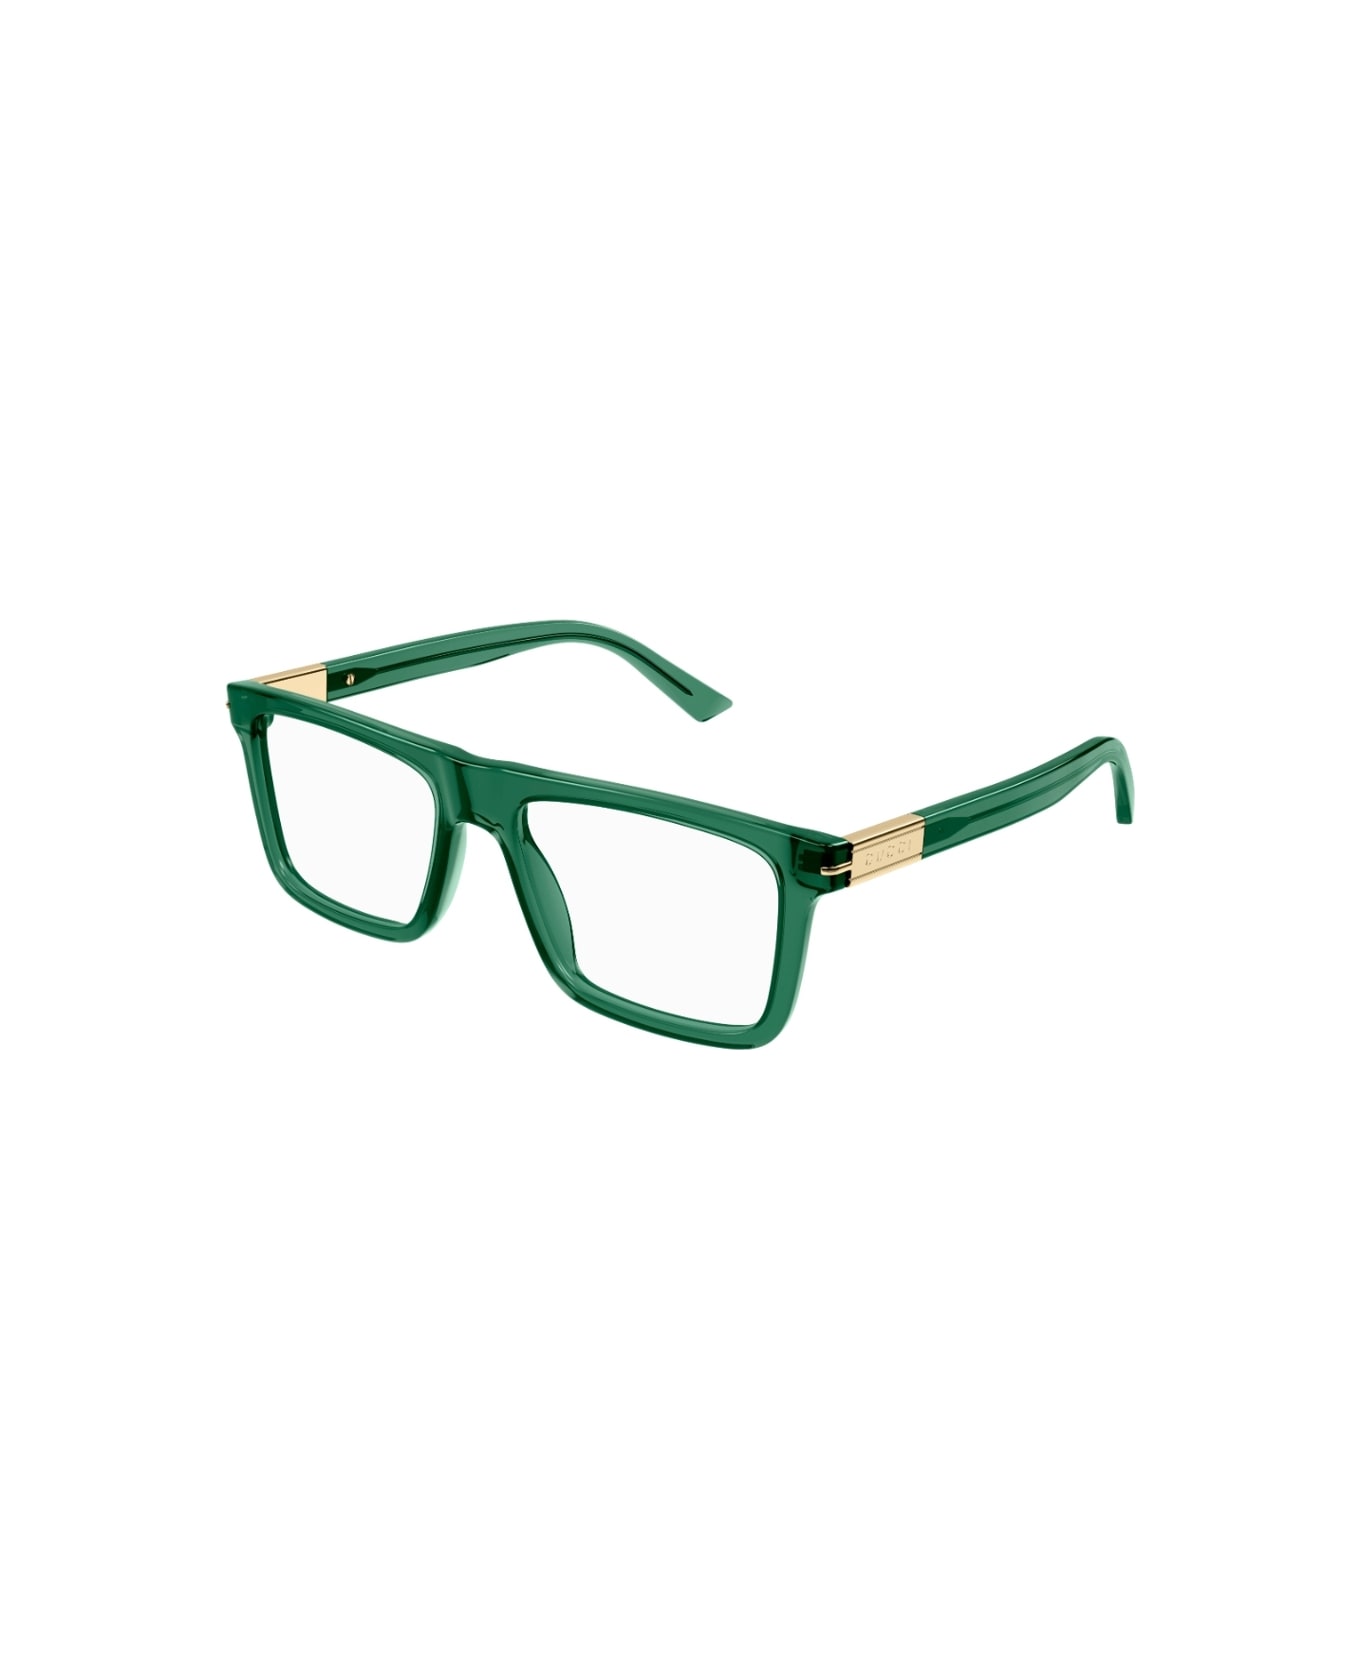 Gucci Eyewear GG1504 003 Glasses - Verde アイウェア